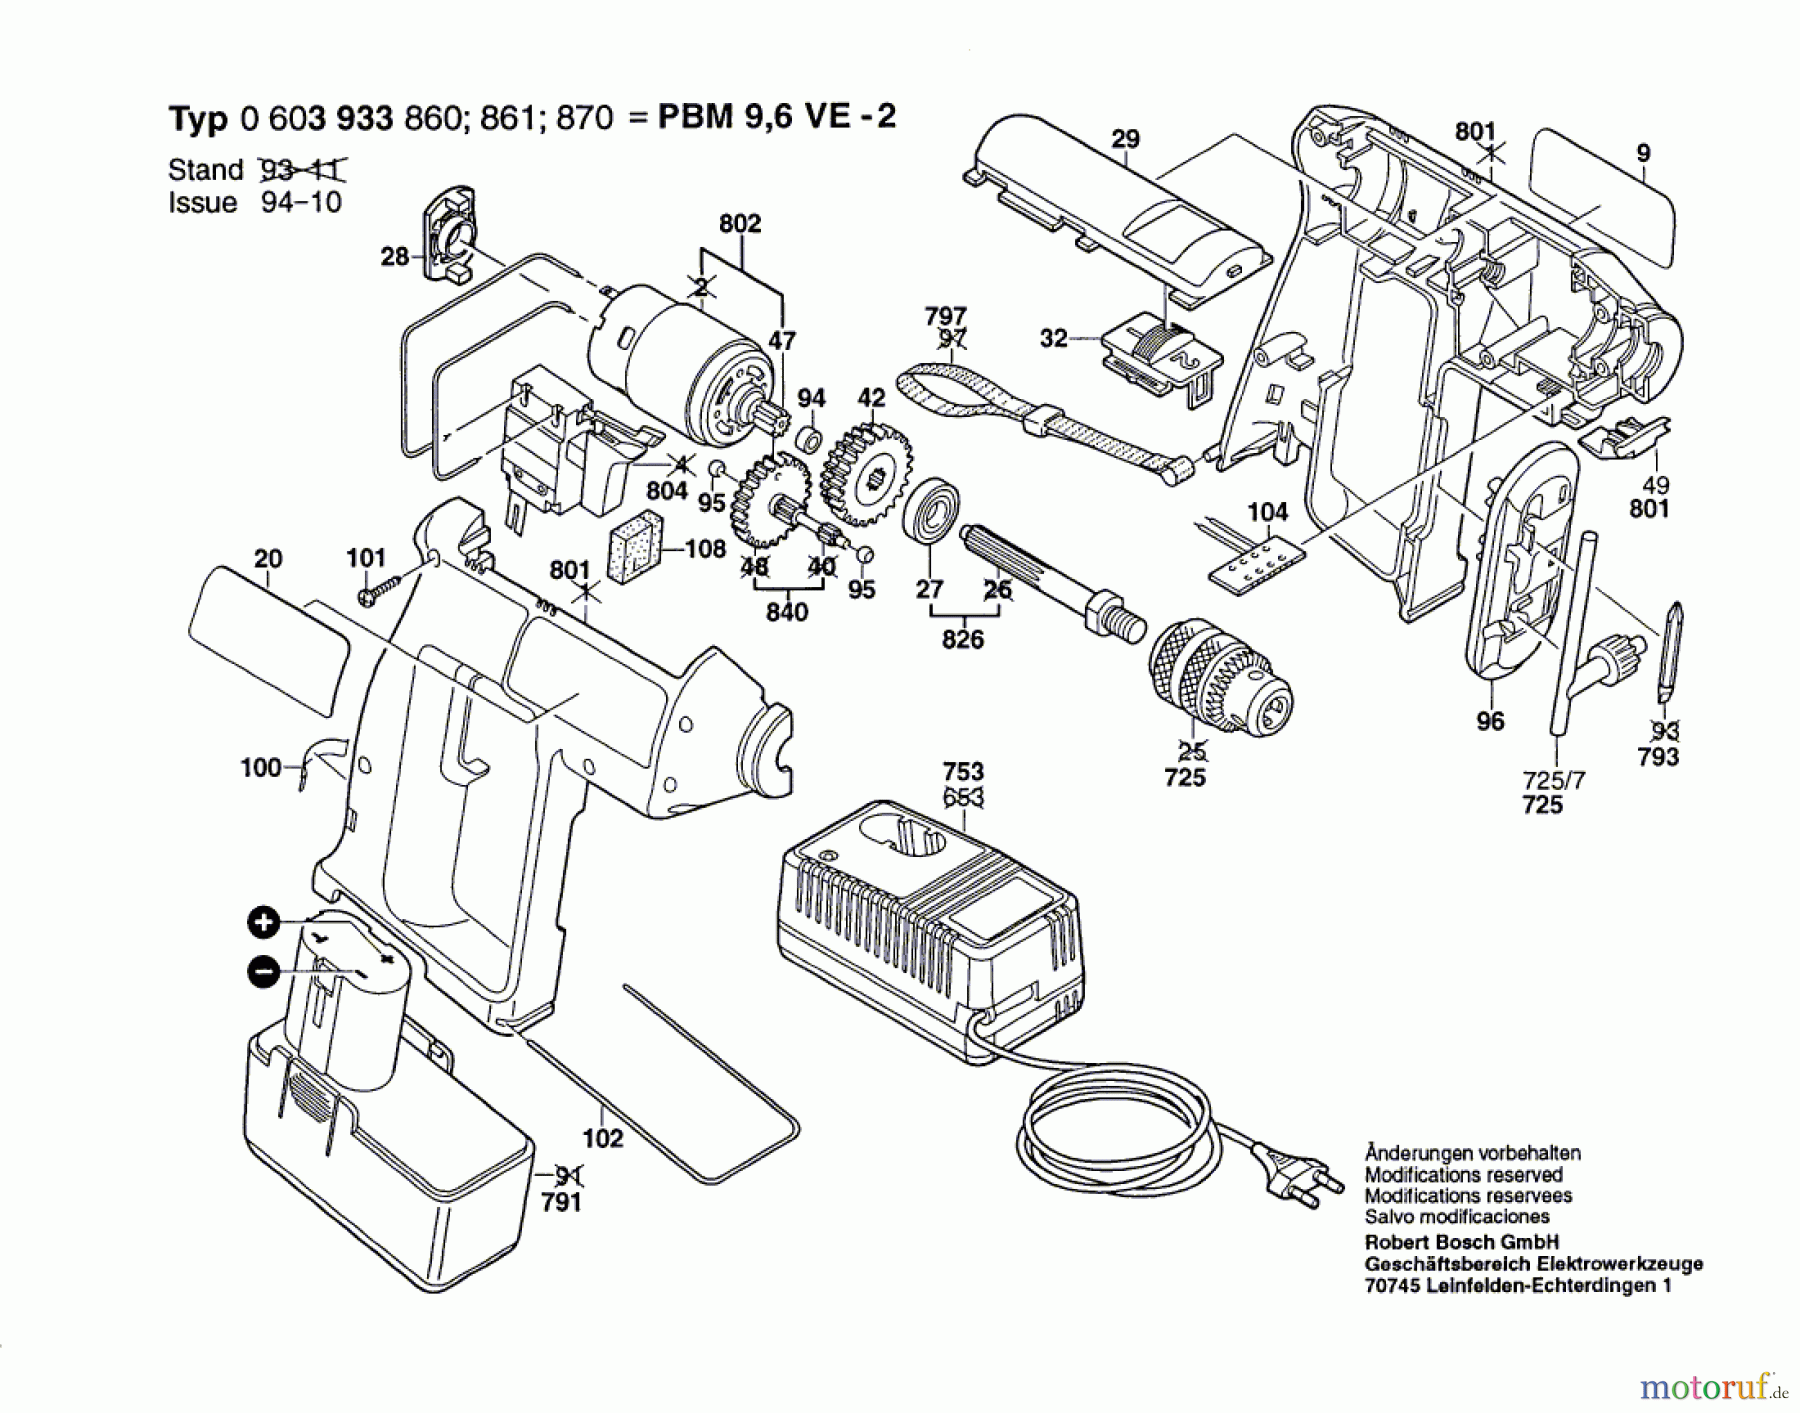  Bosch Akku Werkzeug Hw-Akku-Bohrmaschine PBM 9,6 VE-2 Seite 1